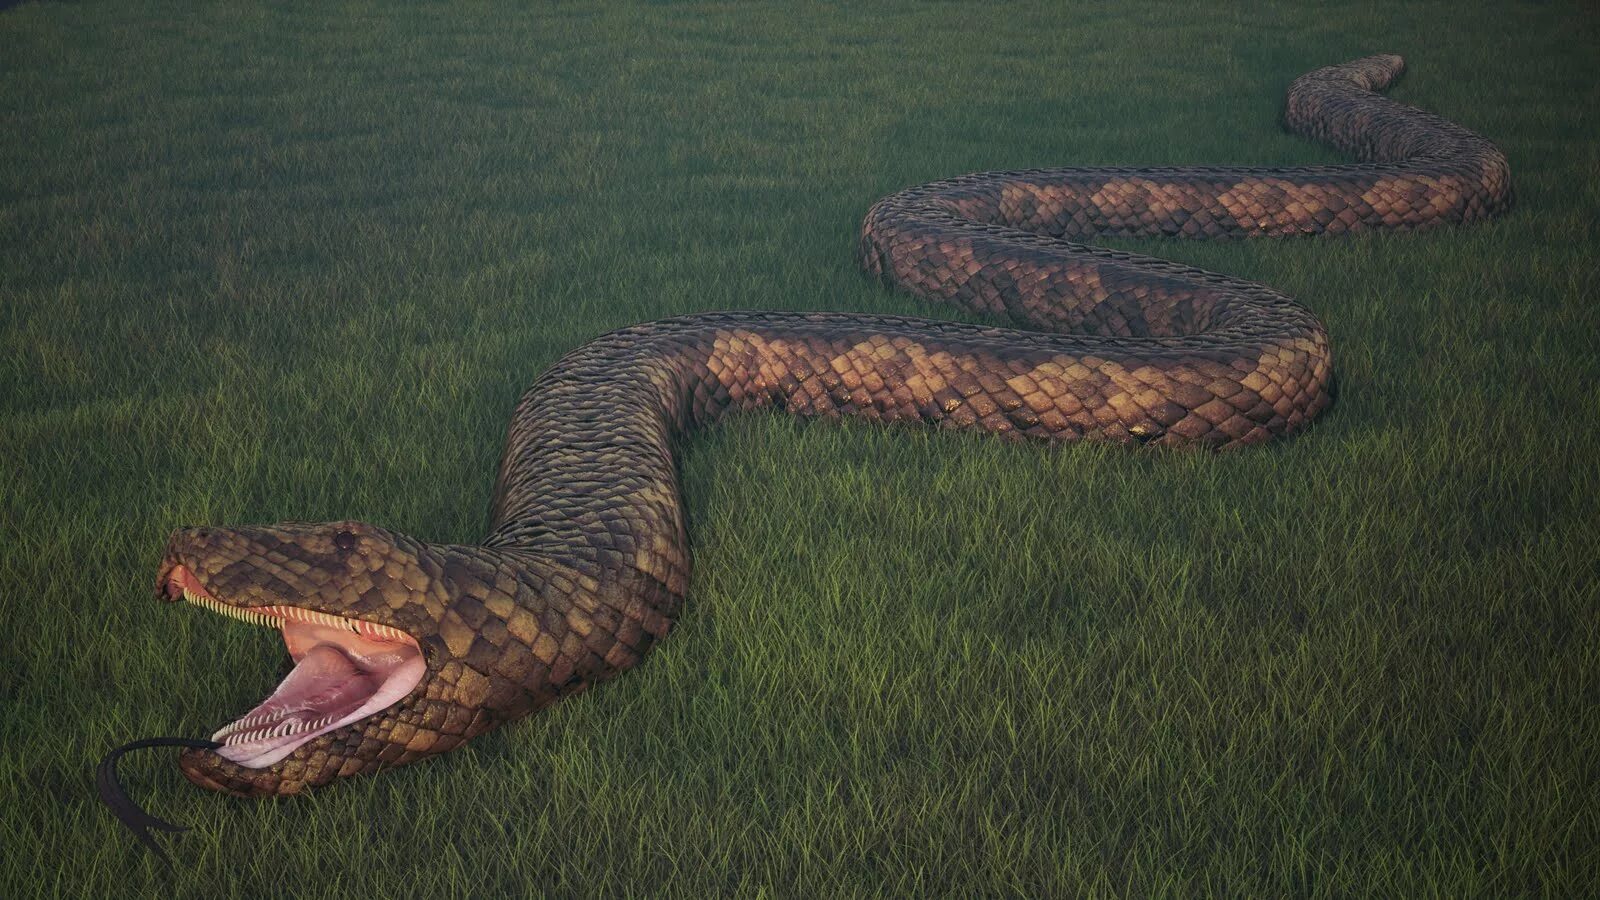 Анаконда змея. Река Амазонка змея Анаконда. Самая большая змея в мире Анаконда. ТИТАНОБОА змея и Анаконда. Самая гигантская анаконда